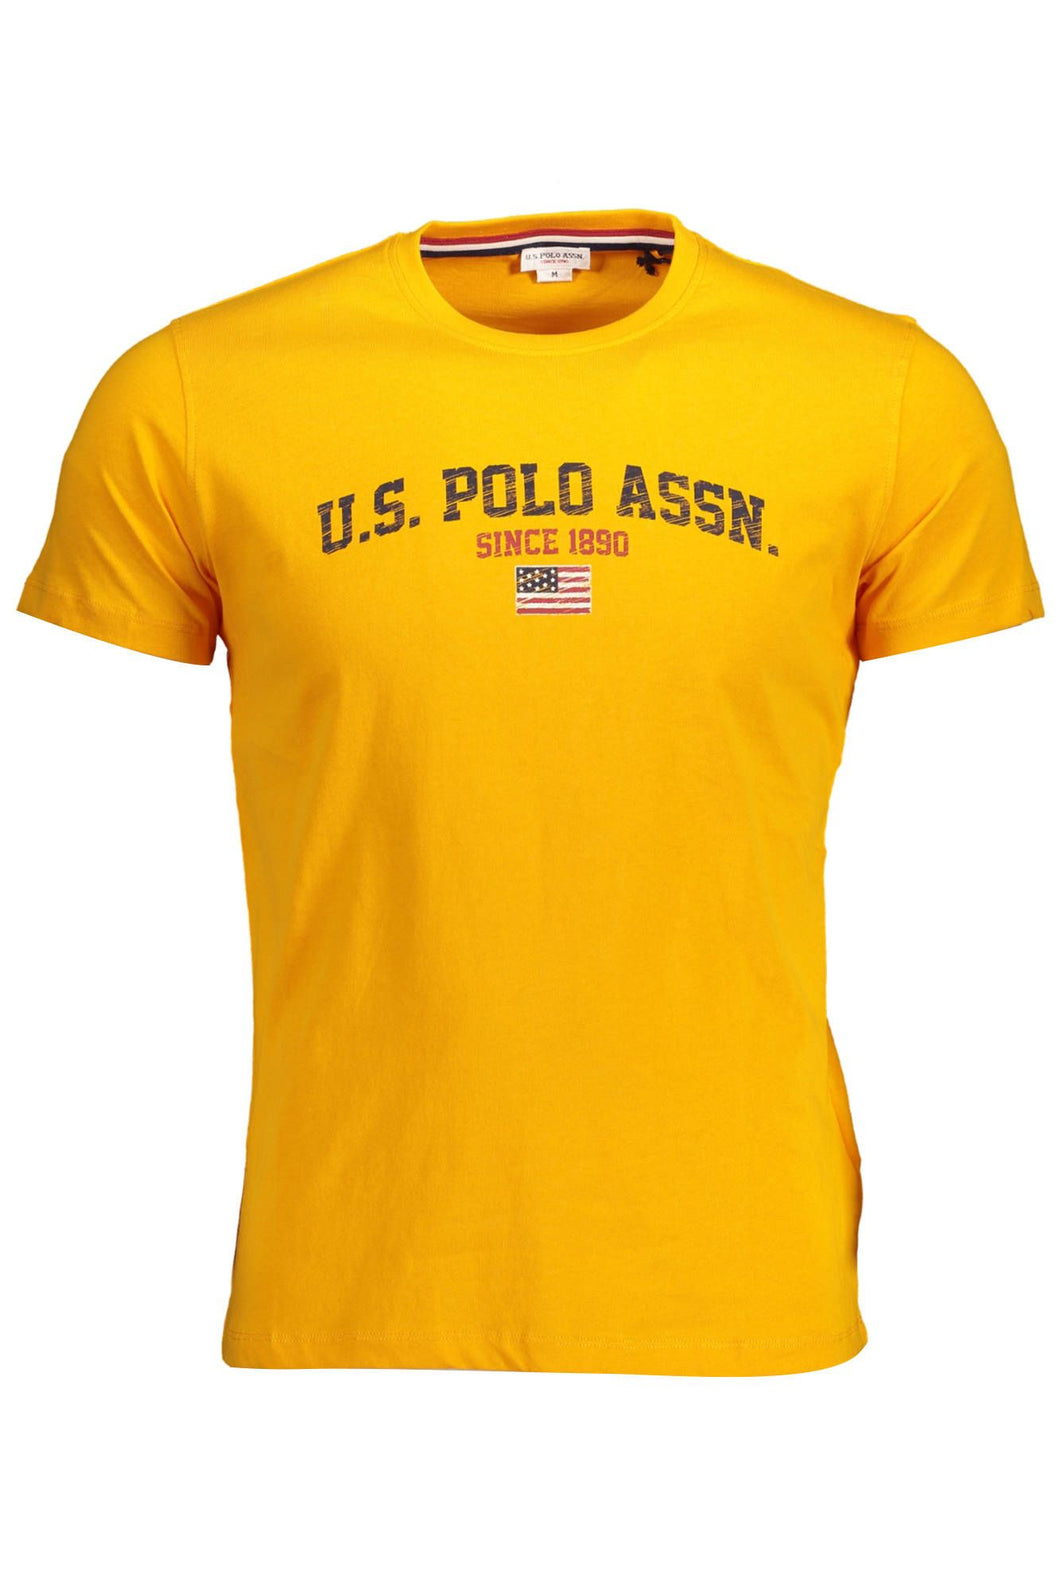 U.S. POLO ASSN. Orange Cotton T-Shirt